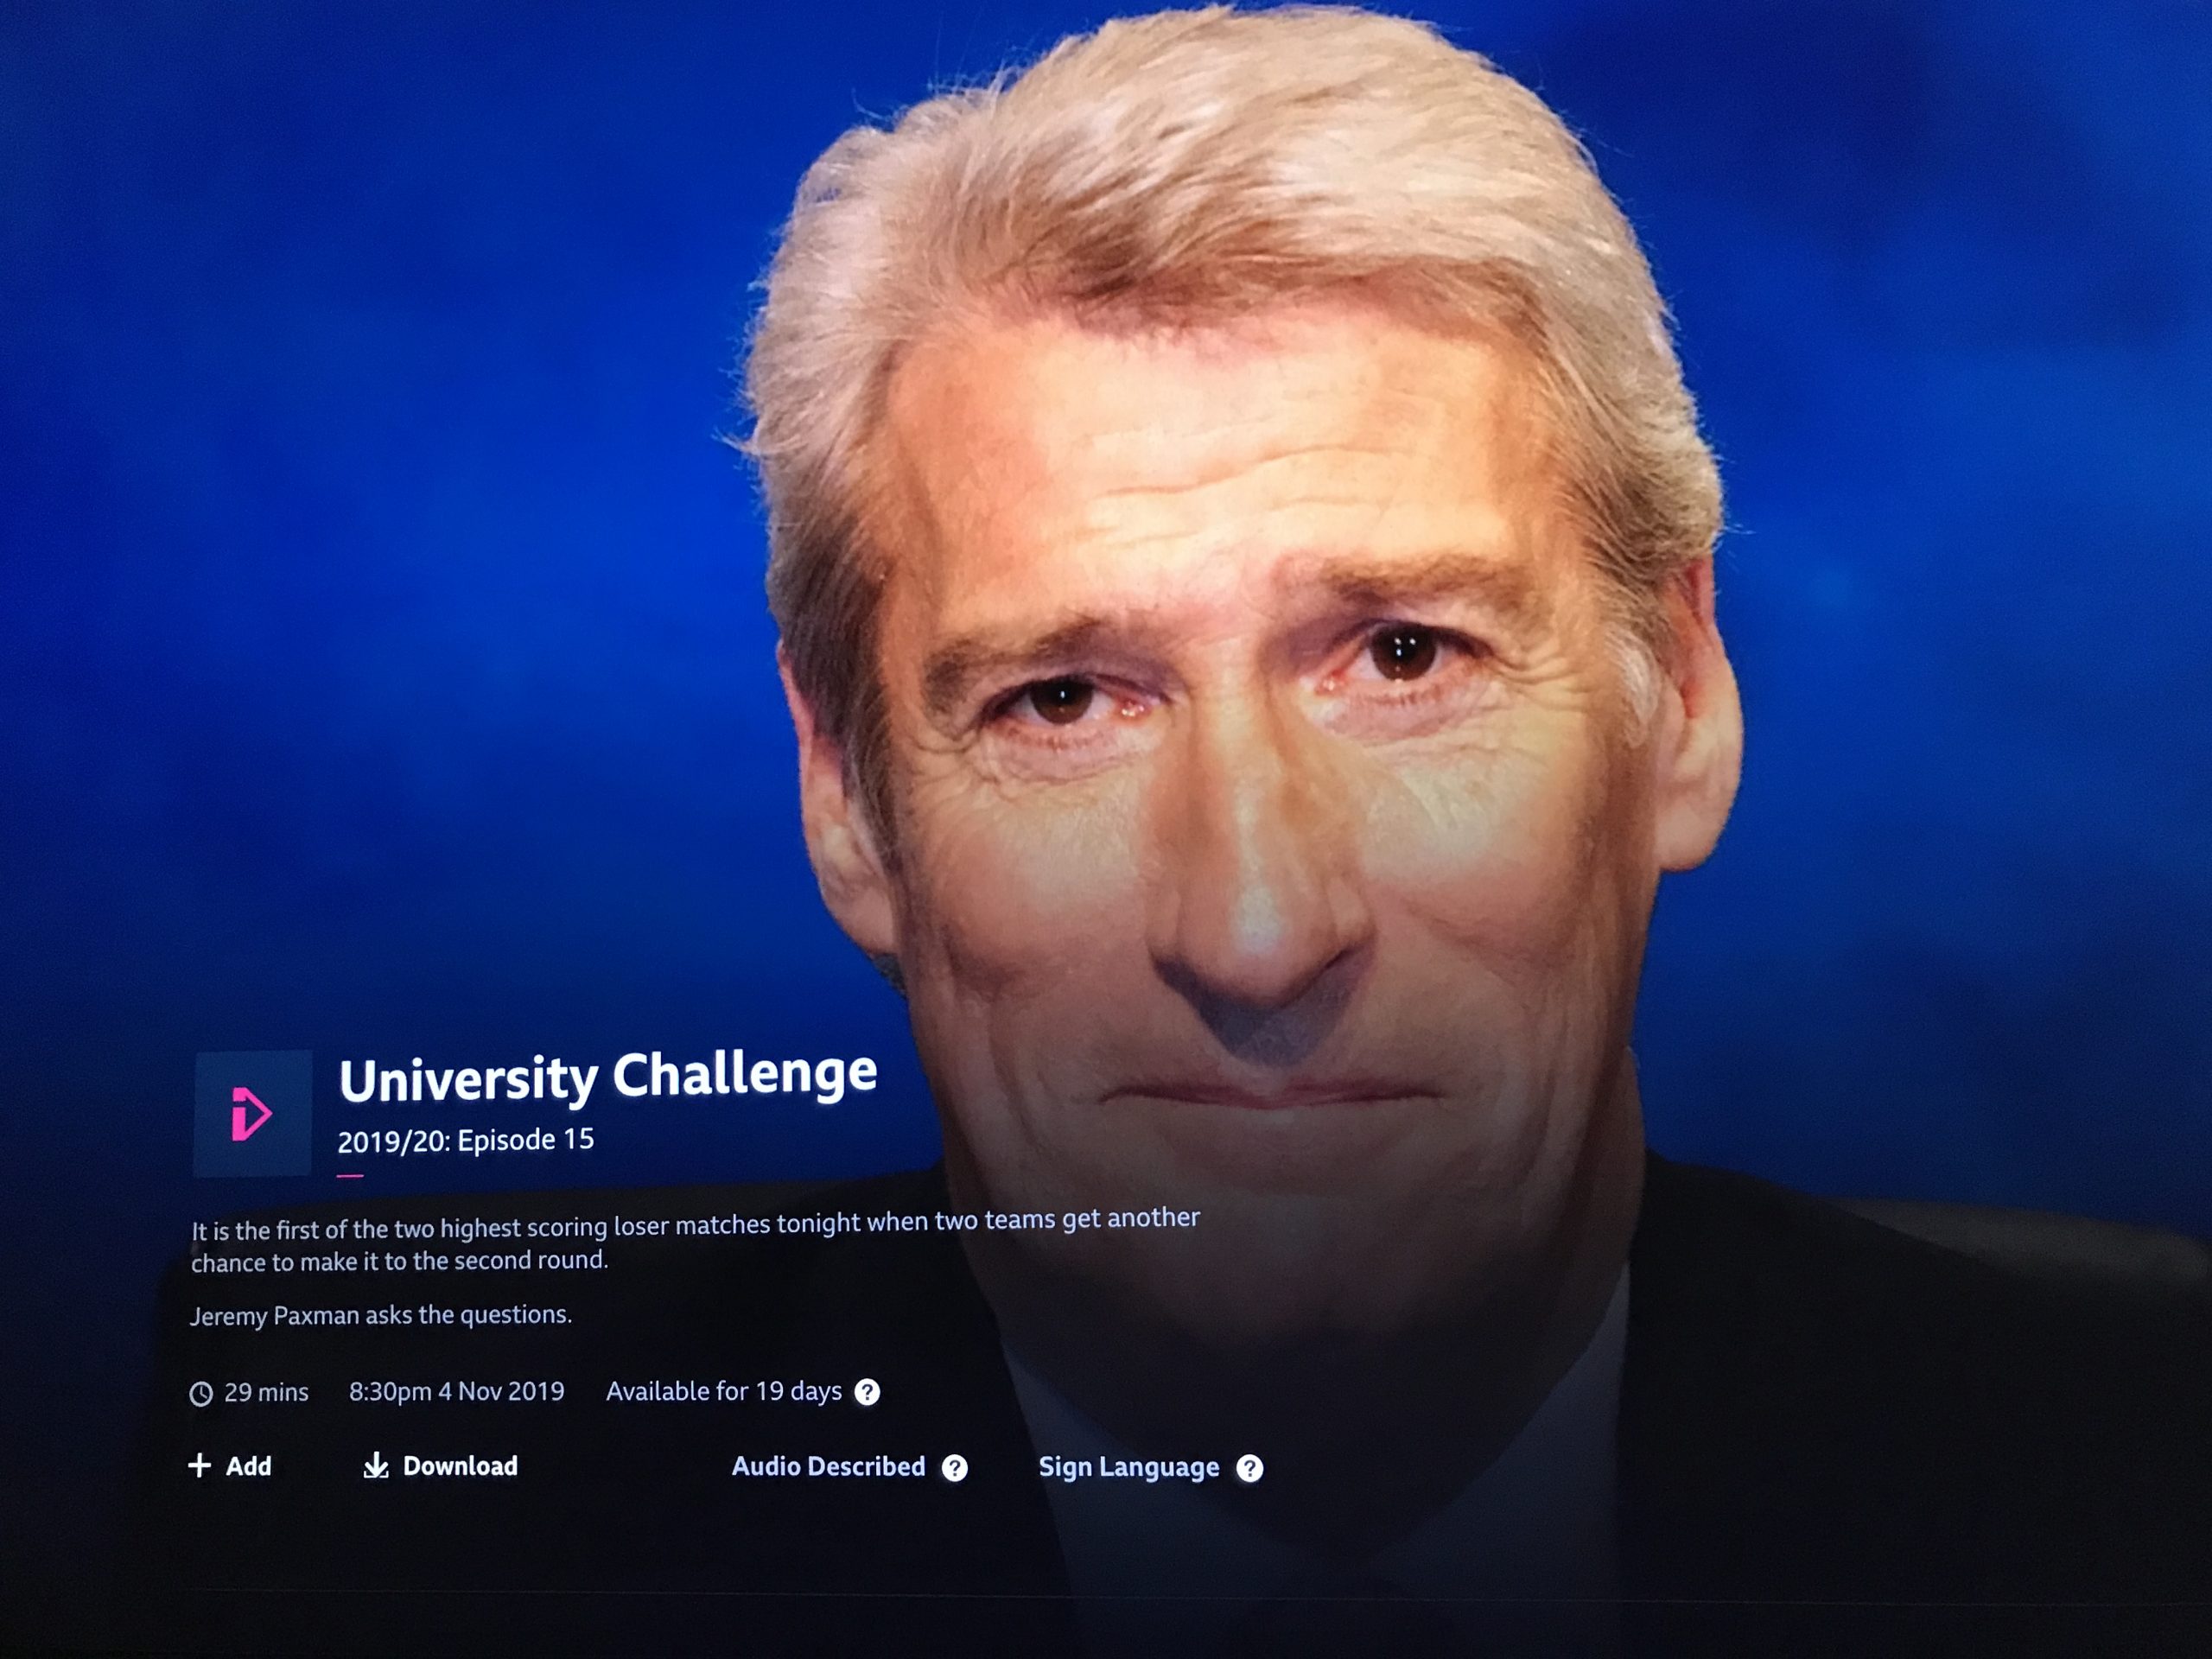 Jeremy Paxman on University Challenge